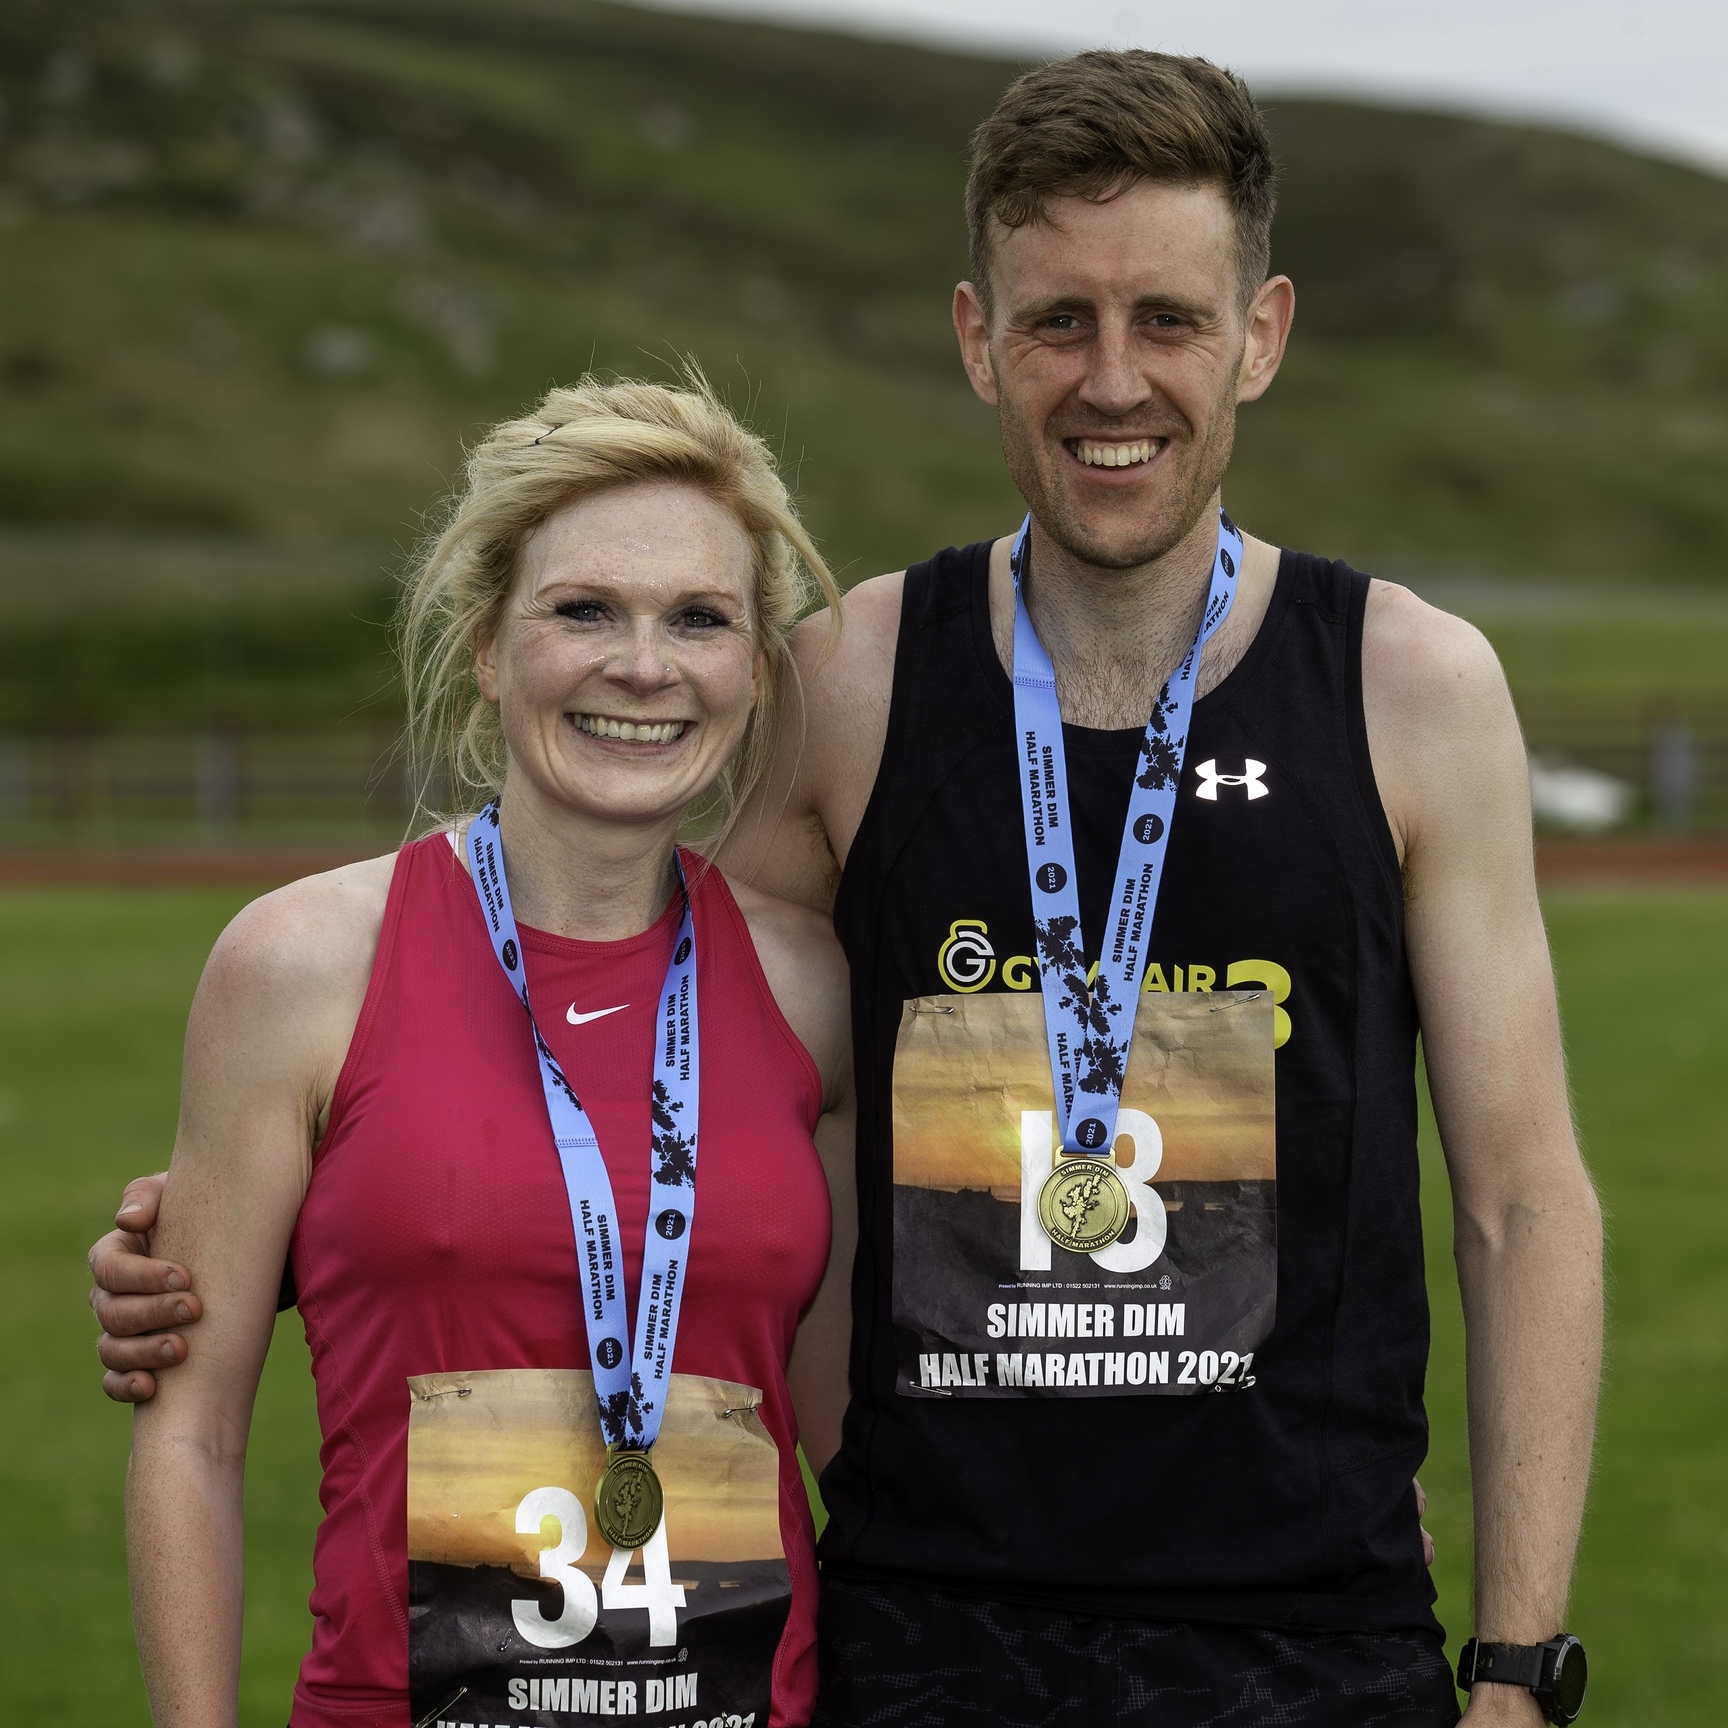 Competitors complete half marathon | The Shetland Times Ltd